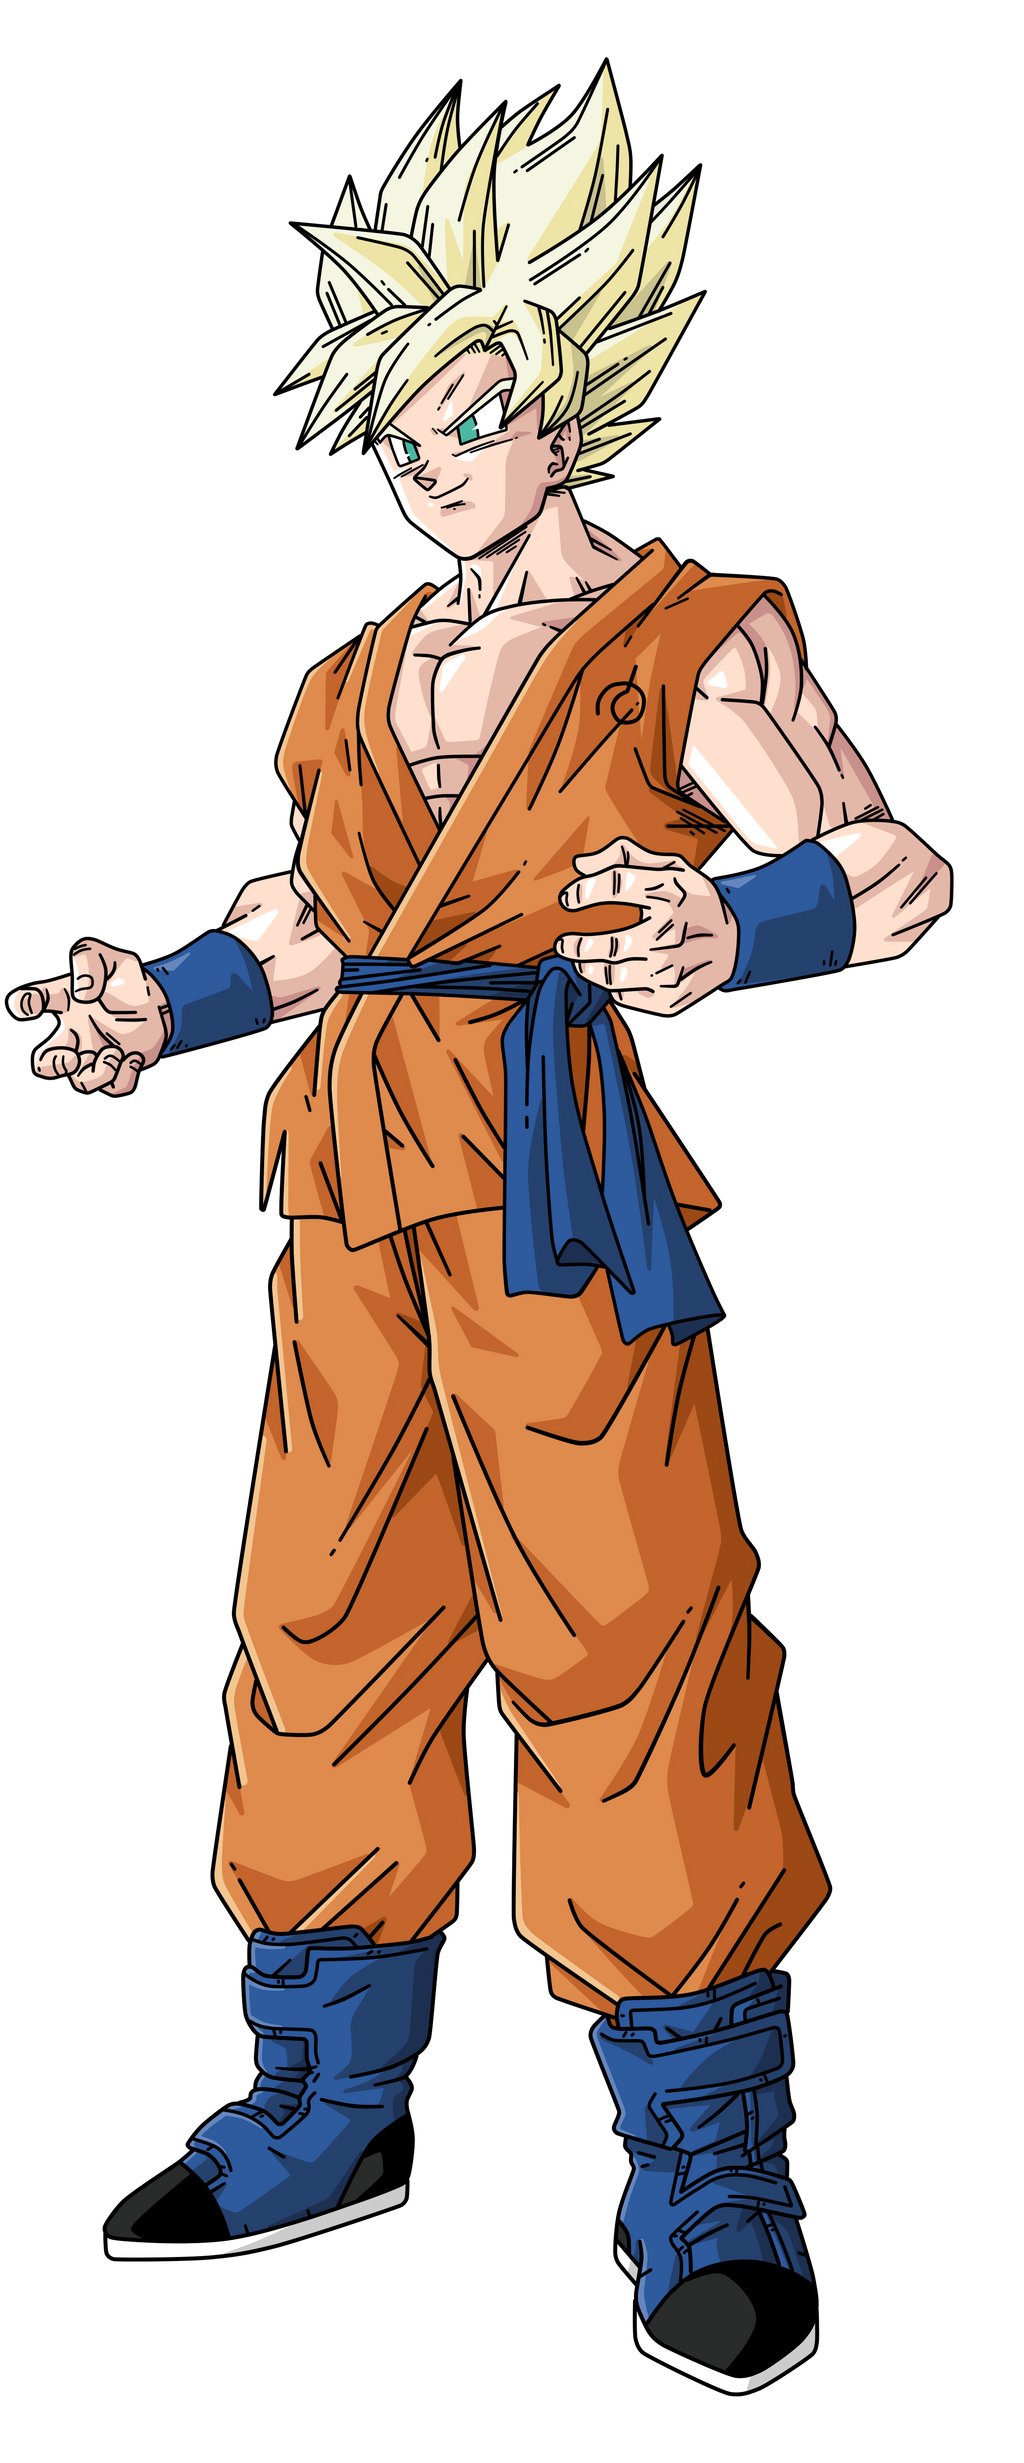 Goku super saiyan 3 by BardockSonic on DeviantArt